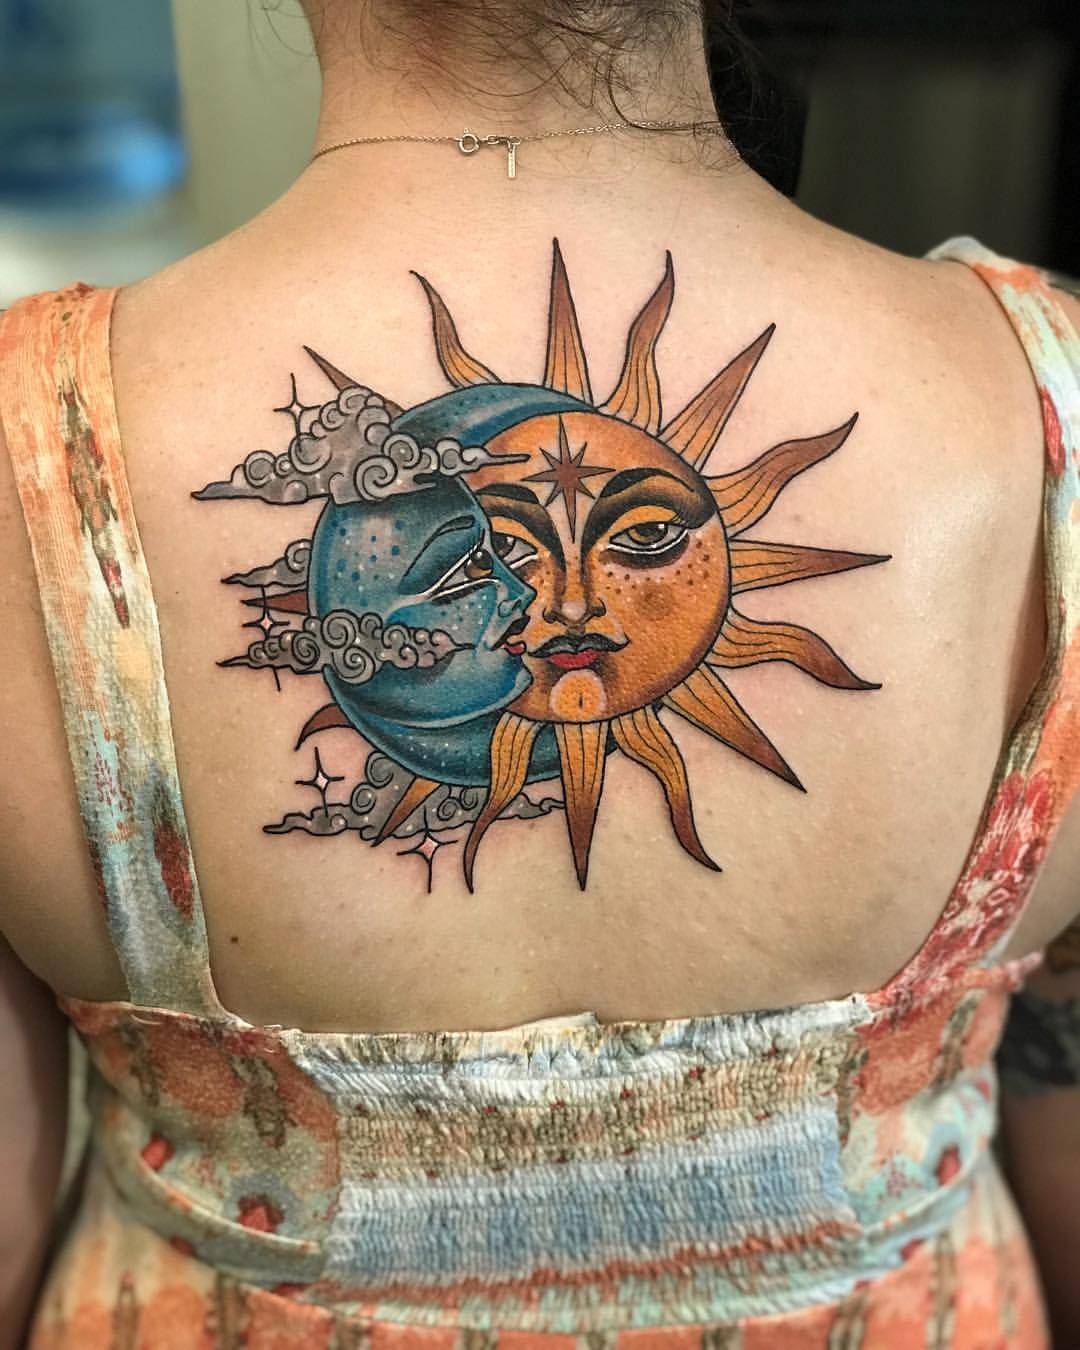 Cute little linework sun 🌞 n moon 🌙 tattoo #lineworktattoo  #sunandmoontattoo #detroittattoos | Instagram